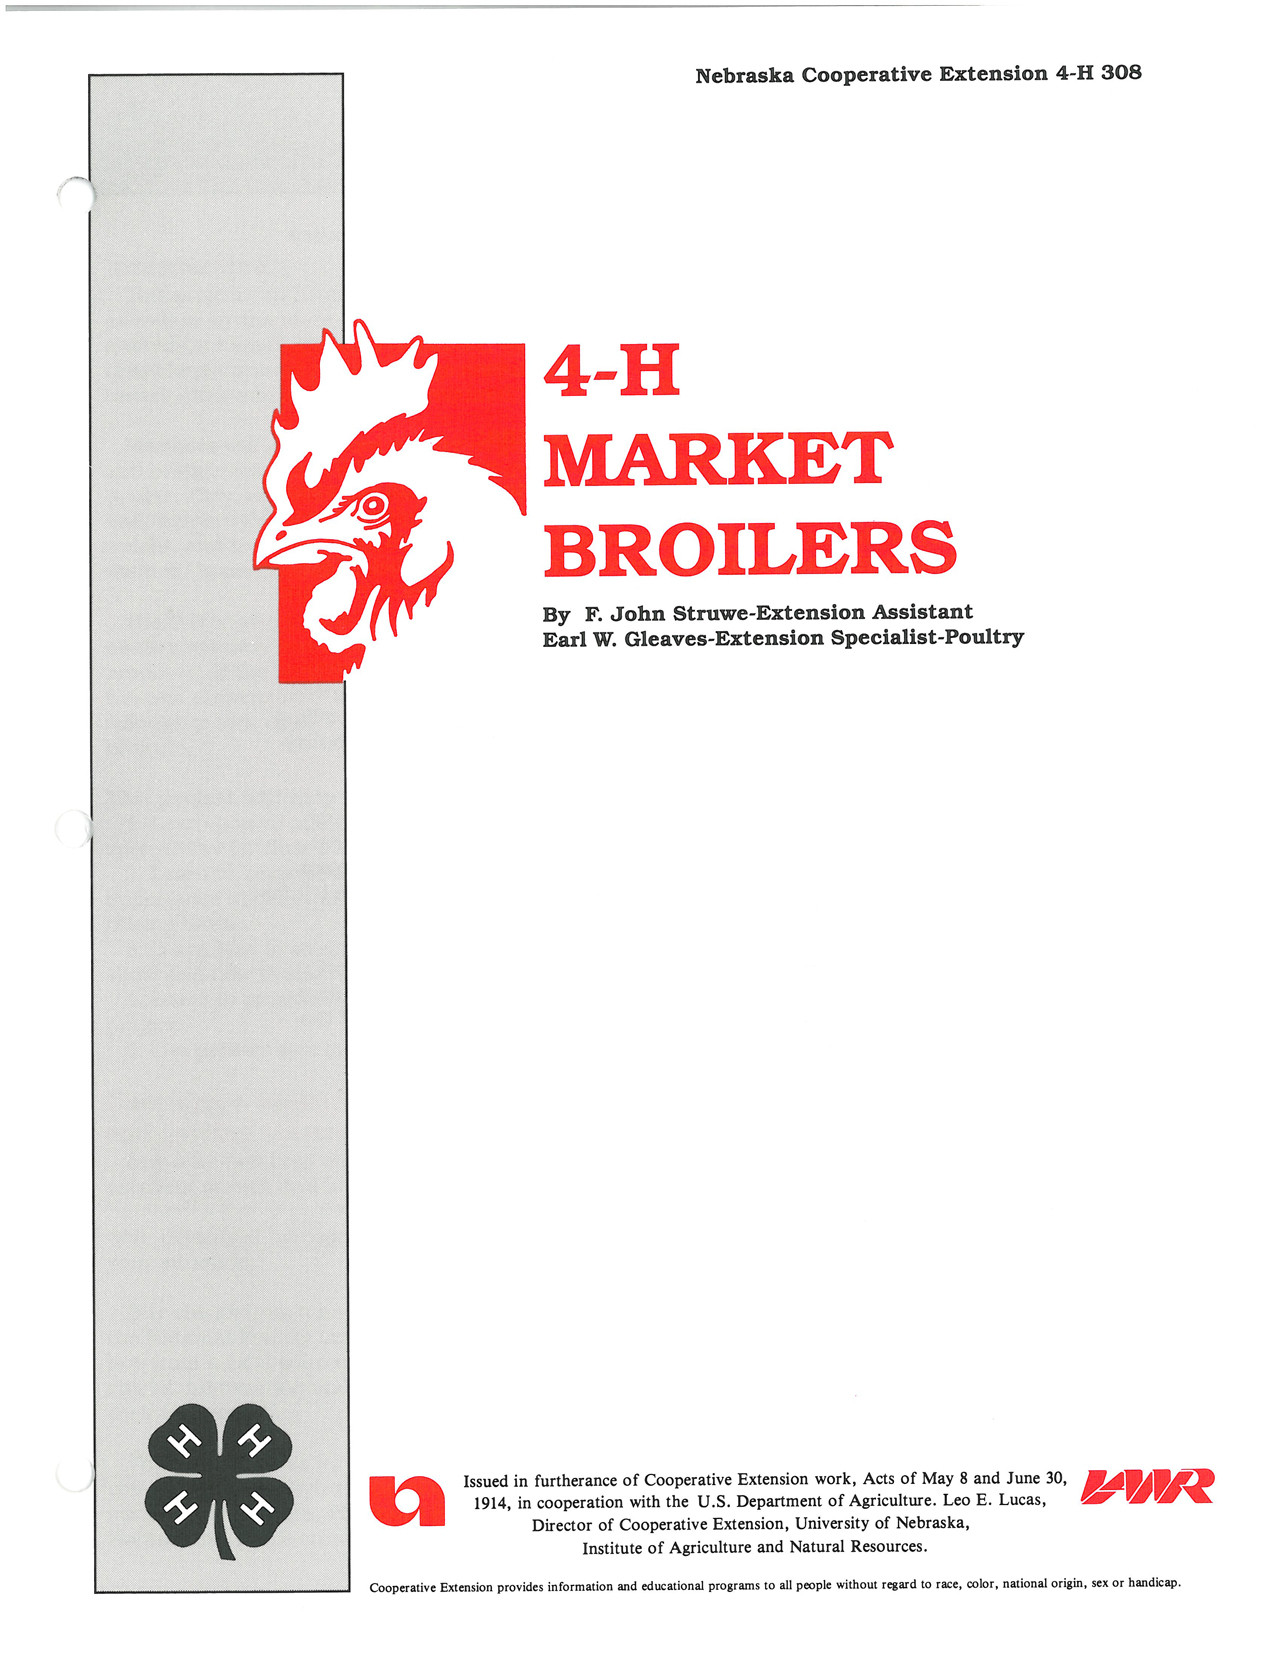 Market Broilers